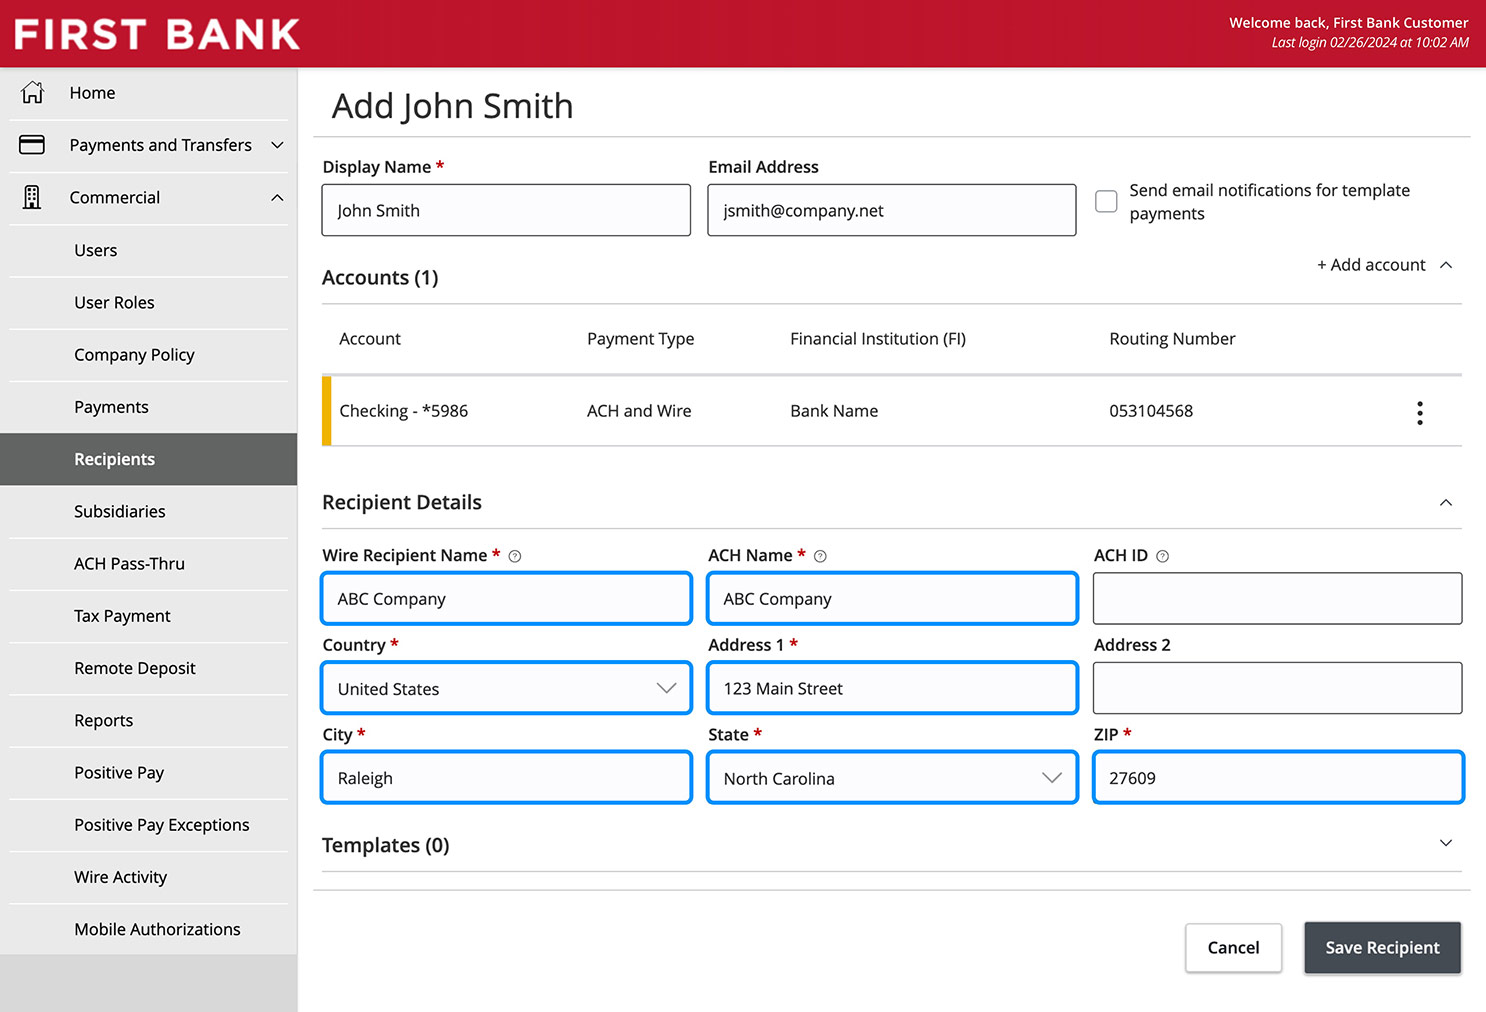 Online Banking Screen showing the recipient detail fields.